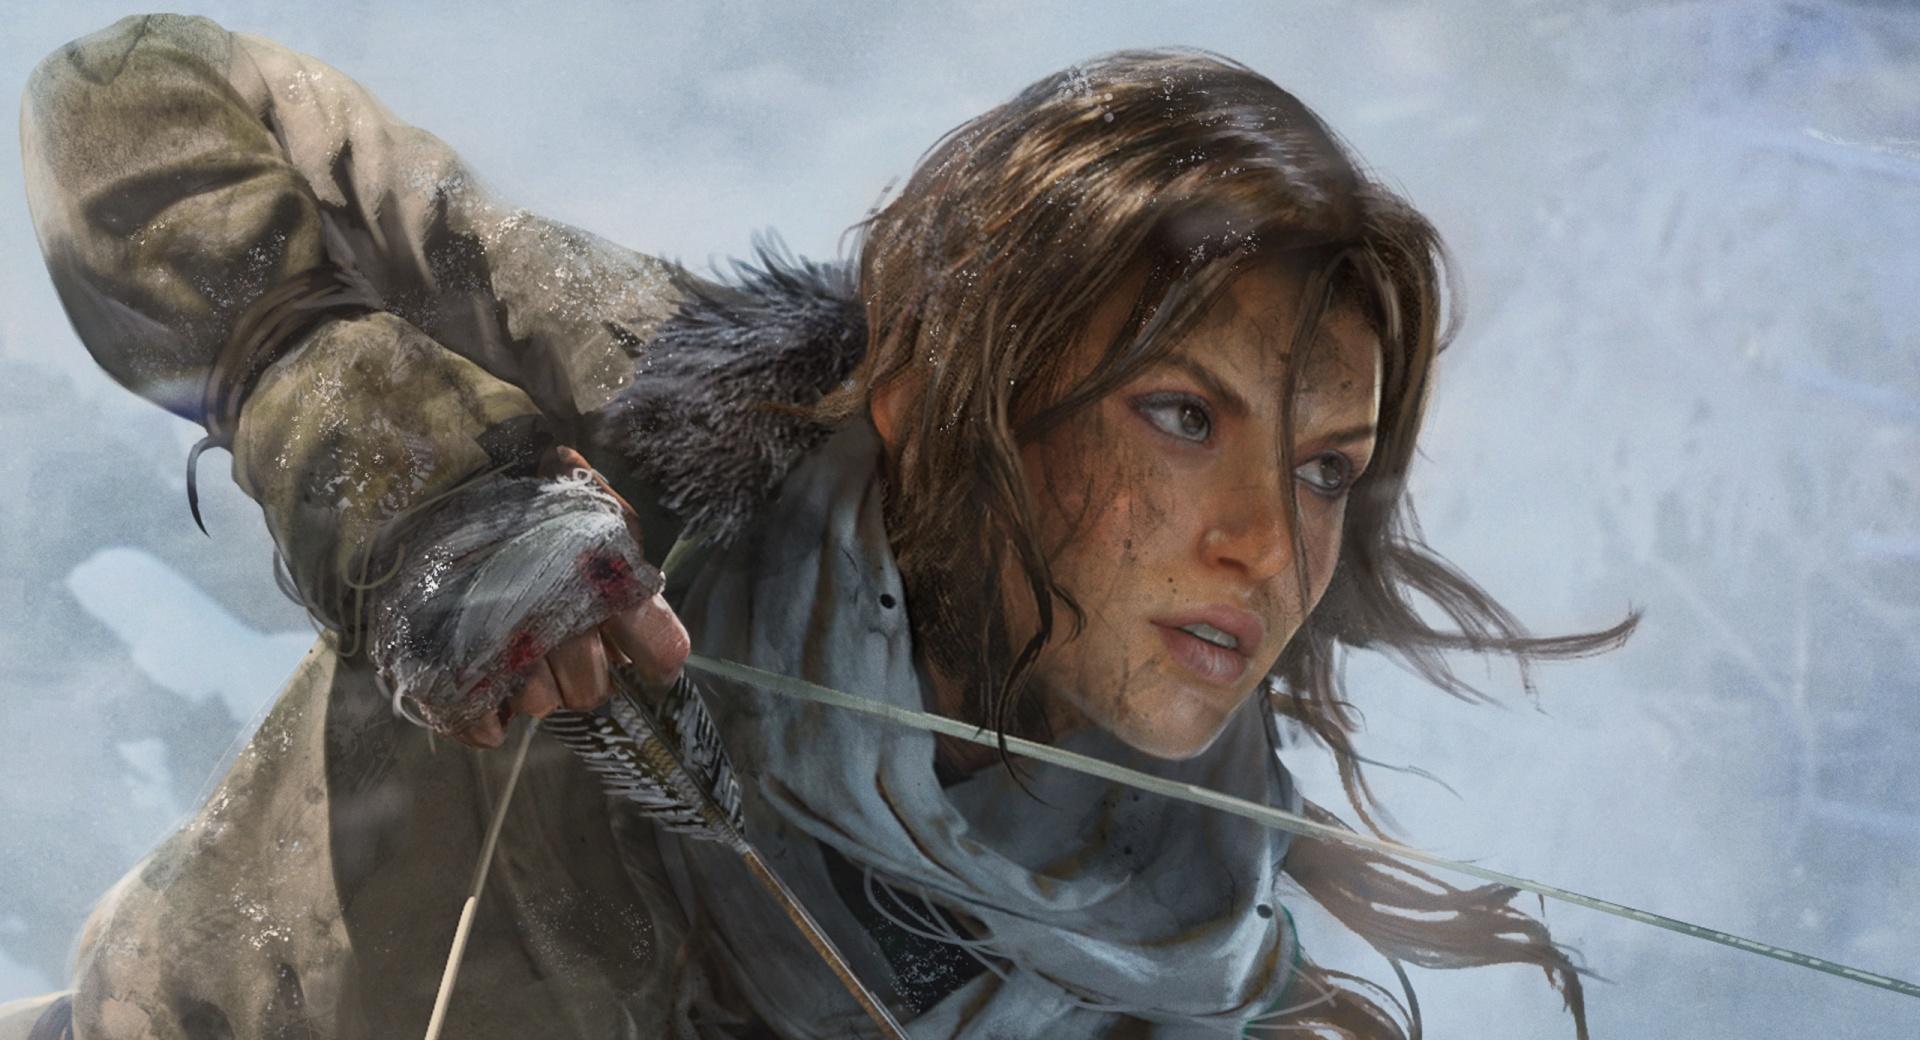 Rise of the Tomb Raider Lara Croft at 2048 x 2048 iPad size wallpapers HD quality